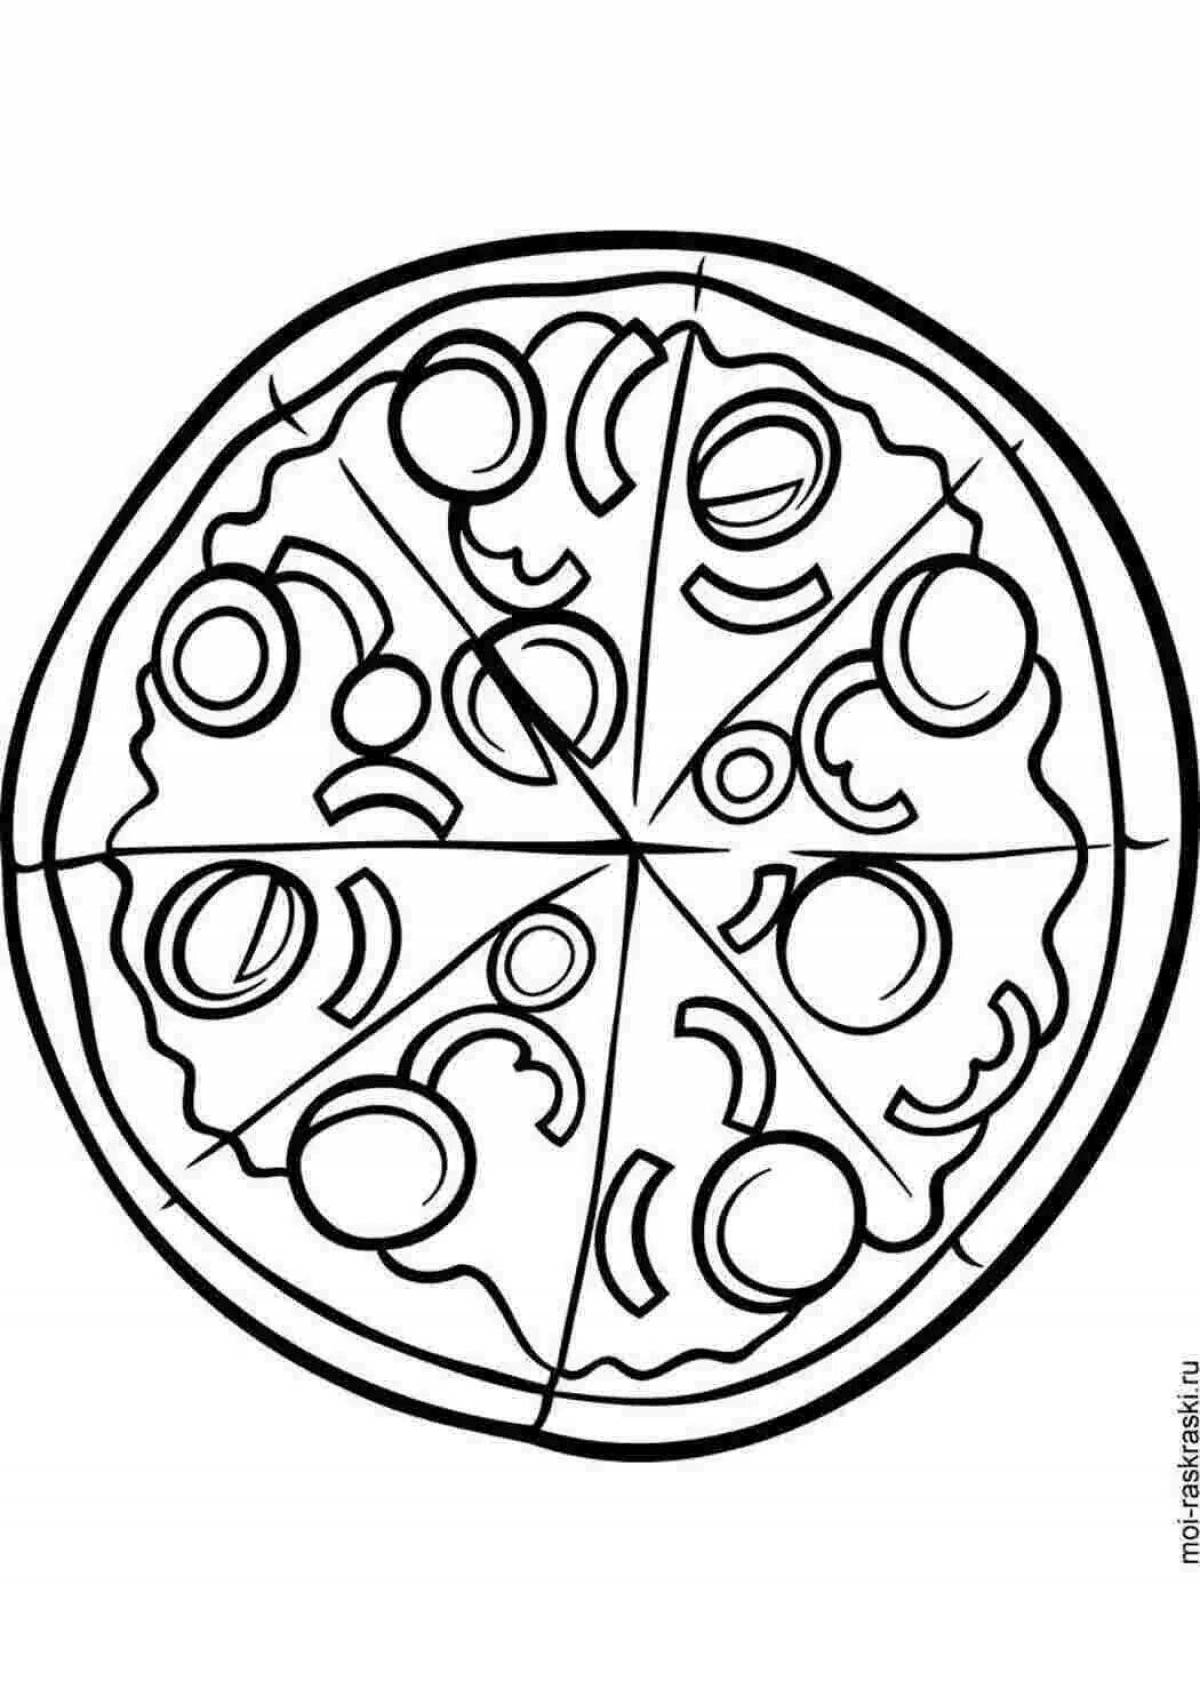 Tempting pizza pattern